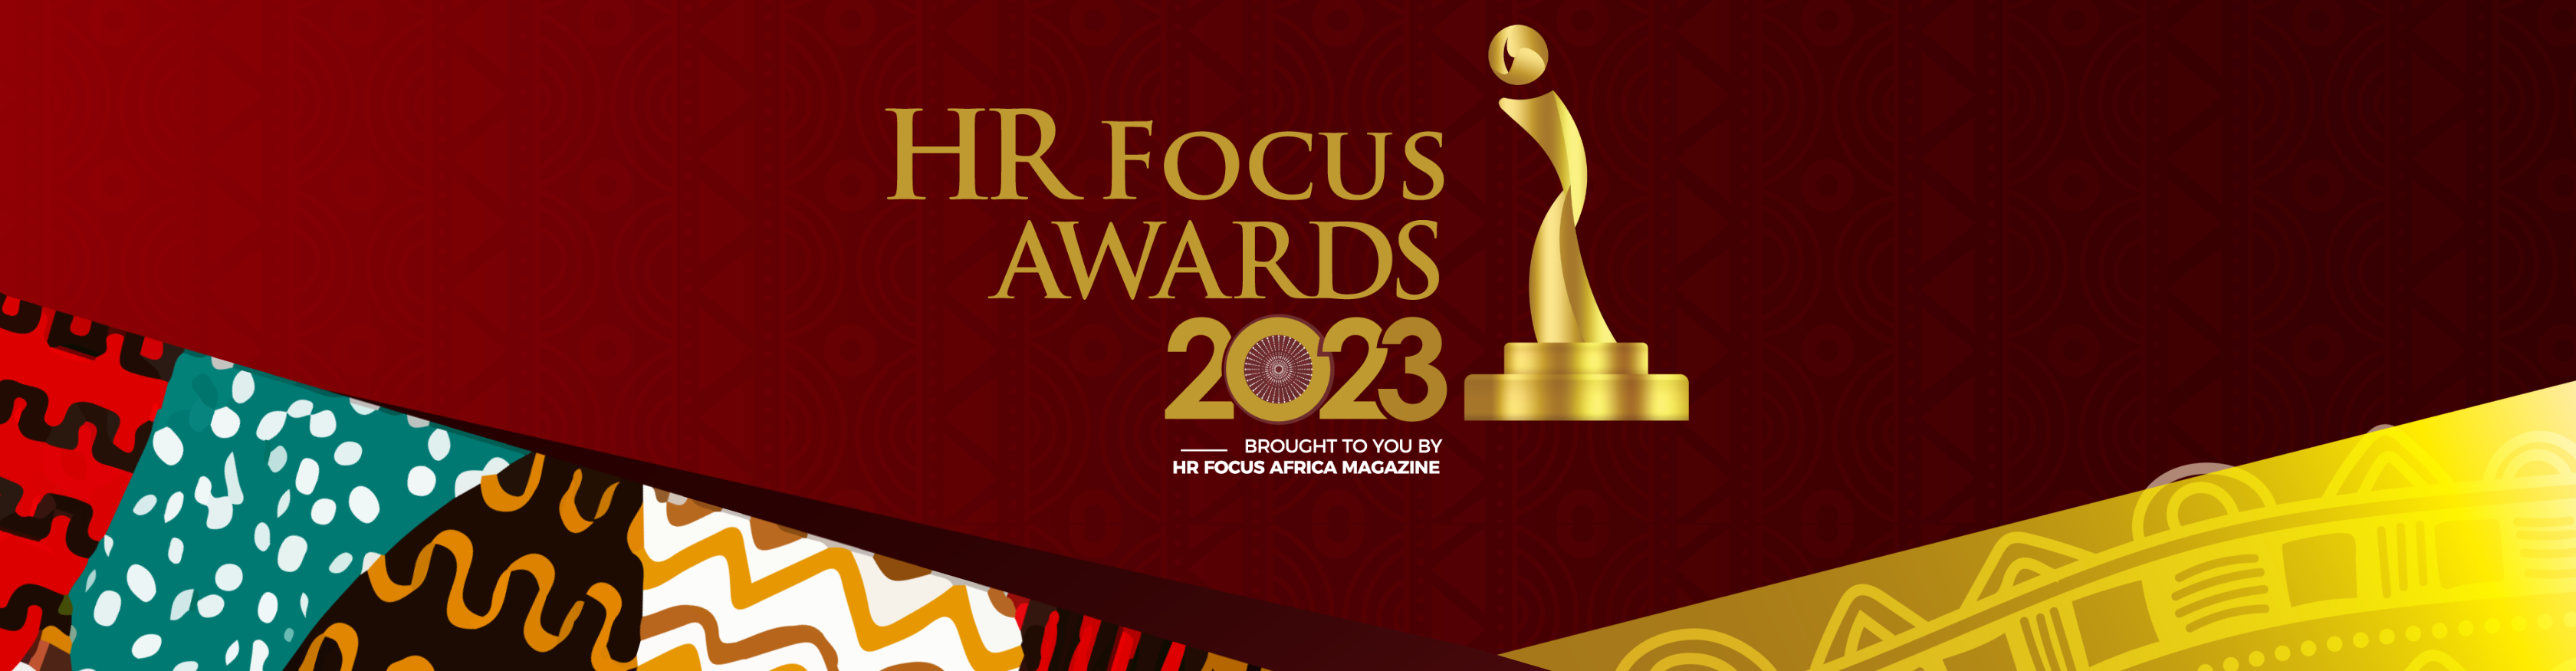 HR Focus Awards